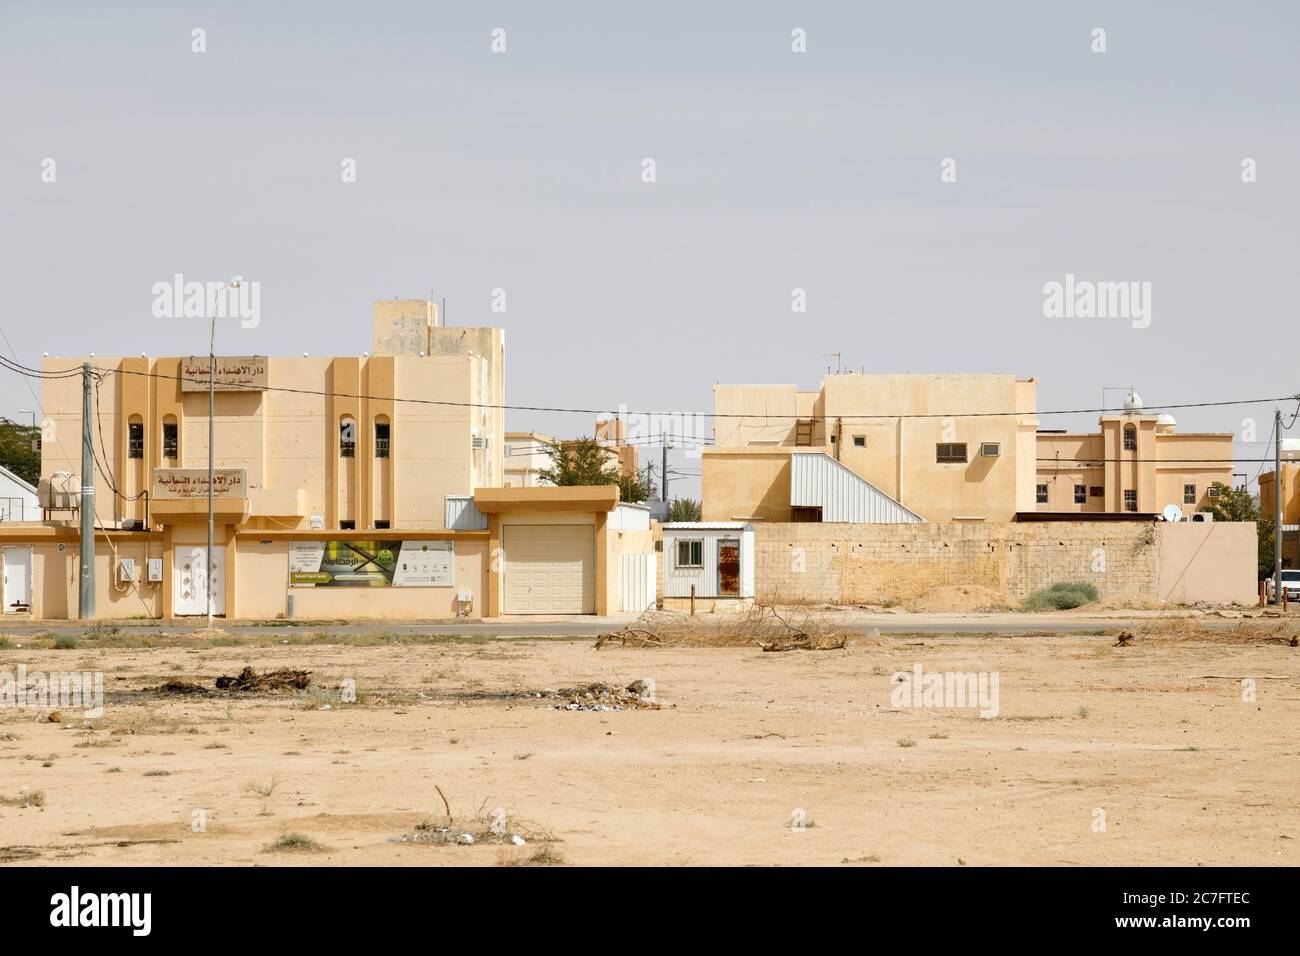 Al Qasab, Saudi Arabia, February 16 2020: Typical houses in a neighborhood in a small town in the desert of Saudi Arabia. Stock Photo